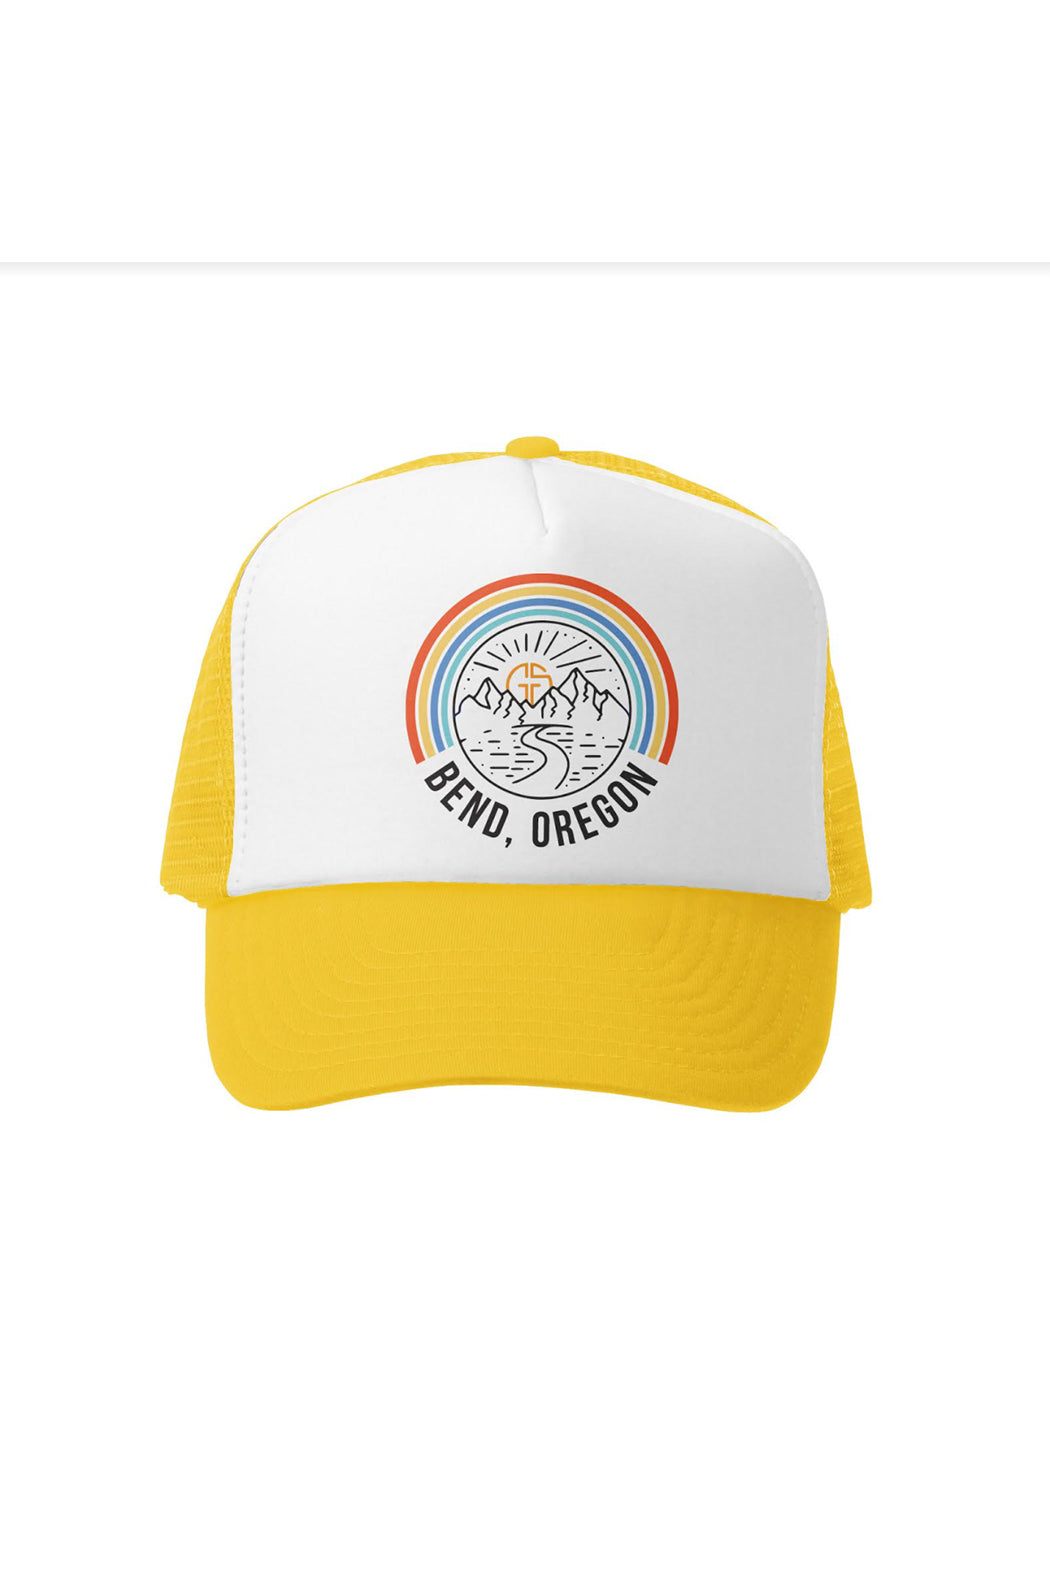 Grom Squad Bend Oregon Trucker Hat